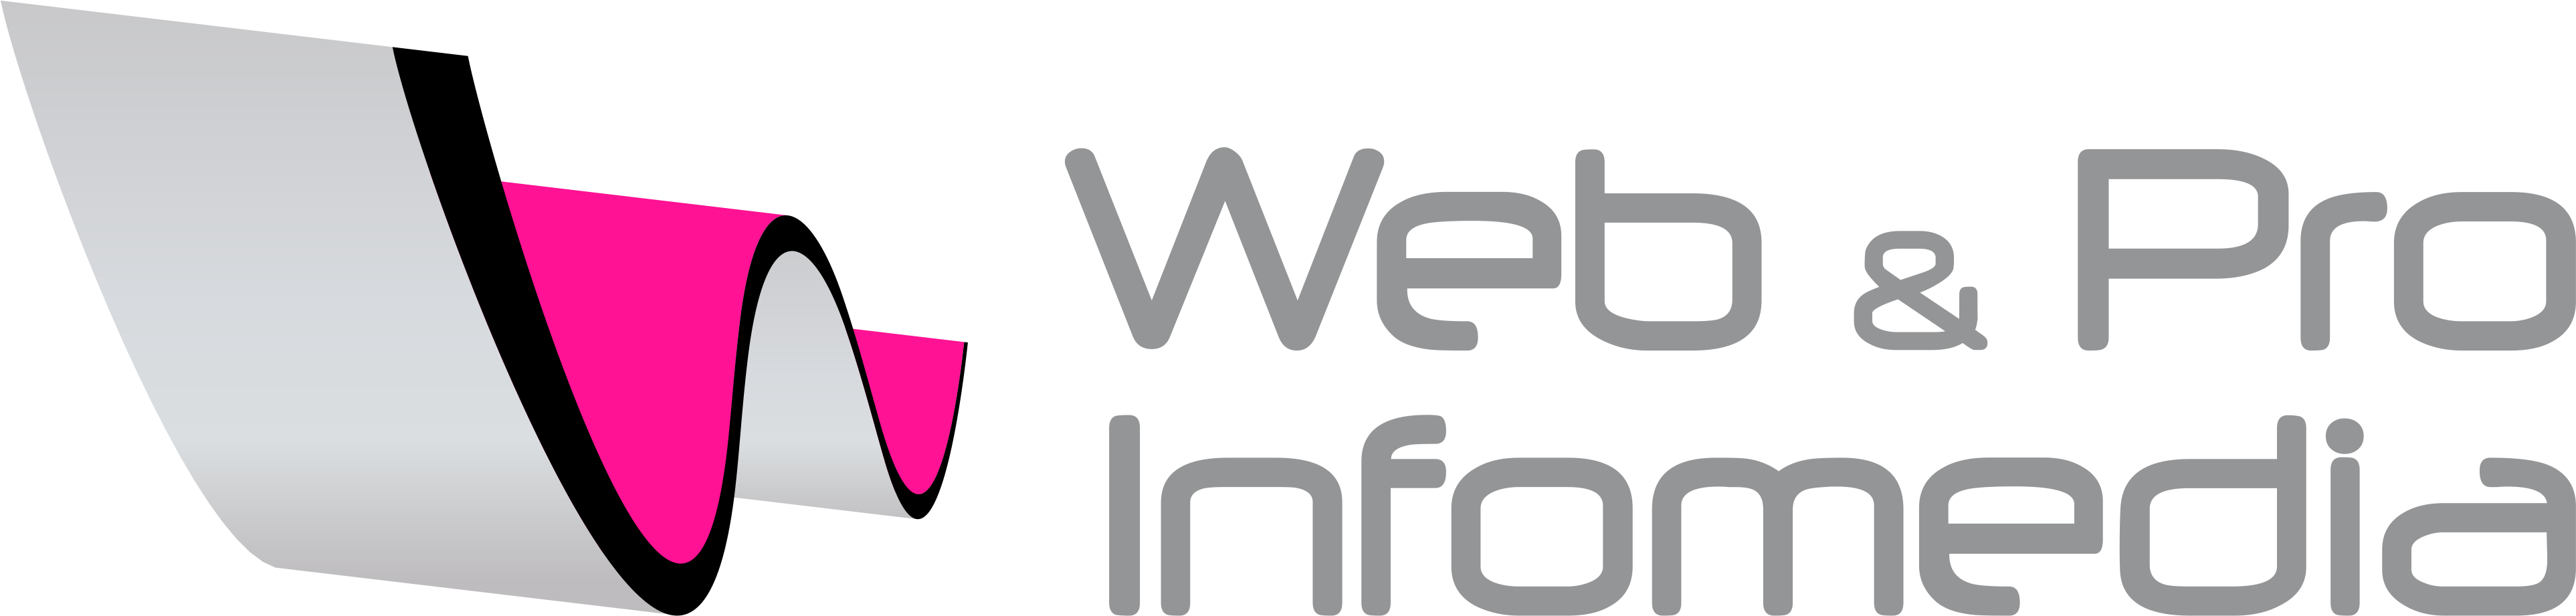 Web and Pro Infomedia Logo